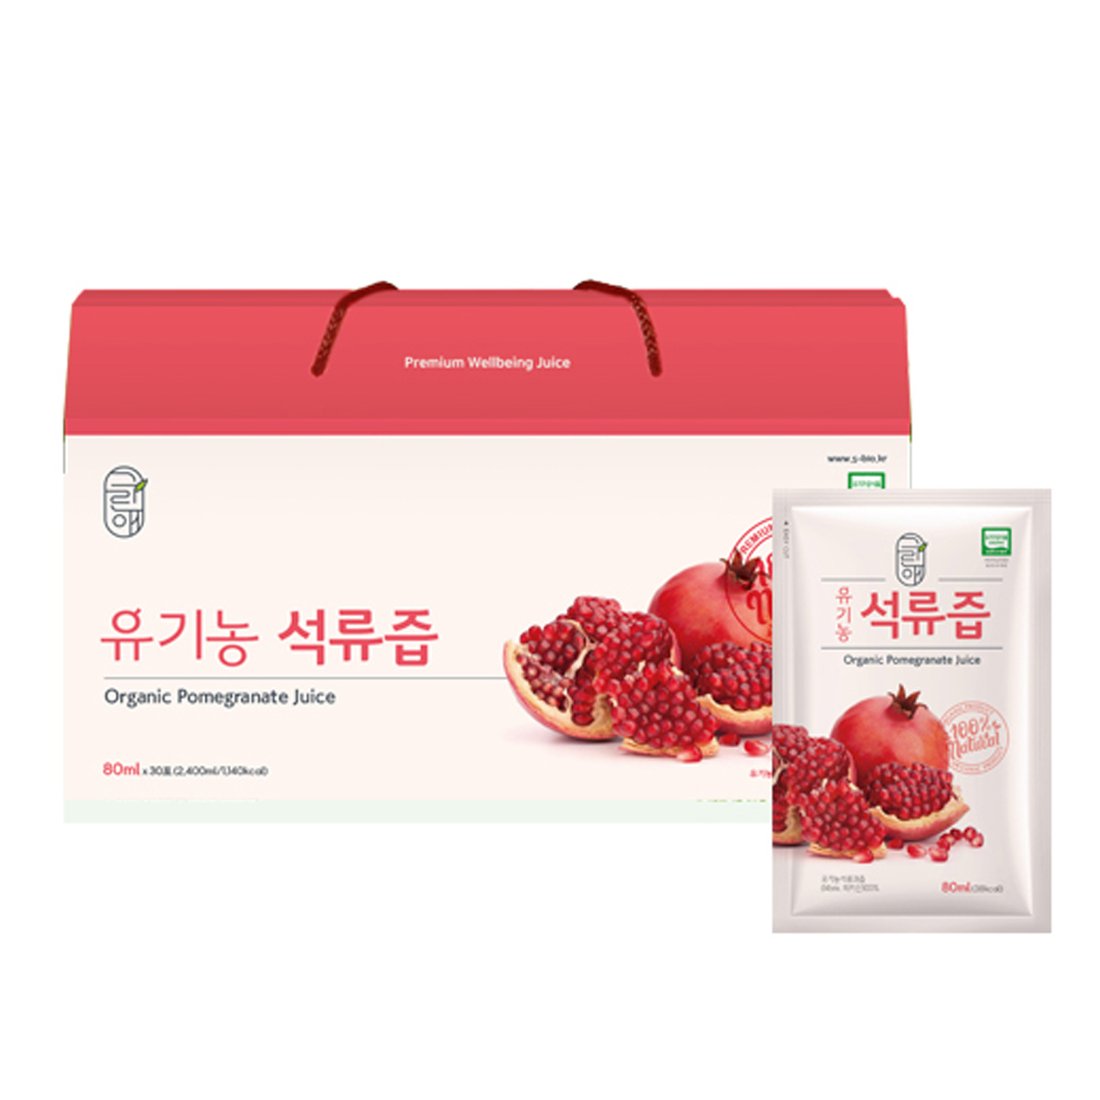 Organic pomegranate juice 유기농 석류즙 80ml